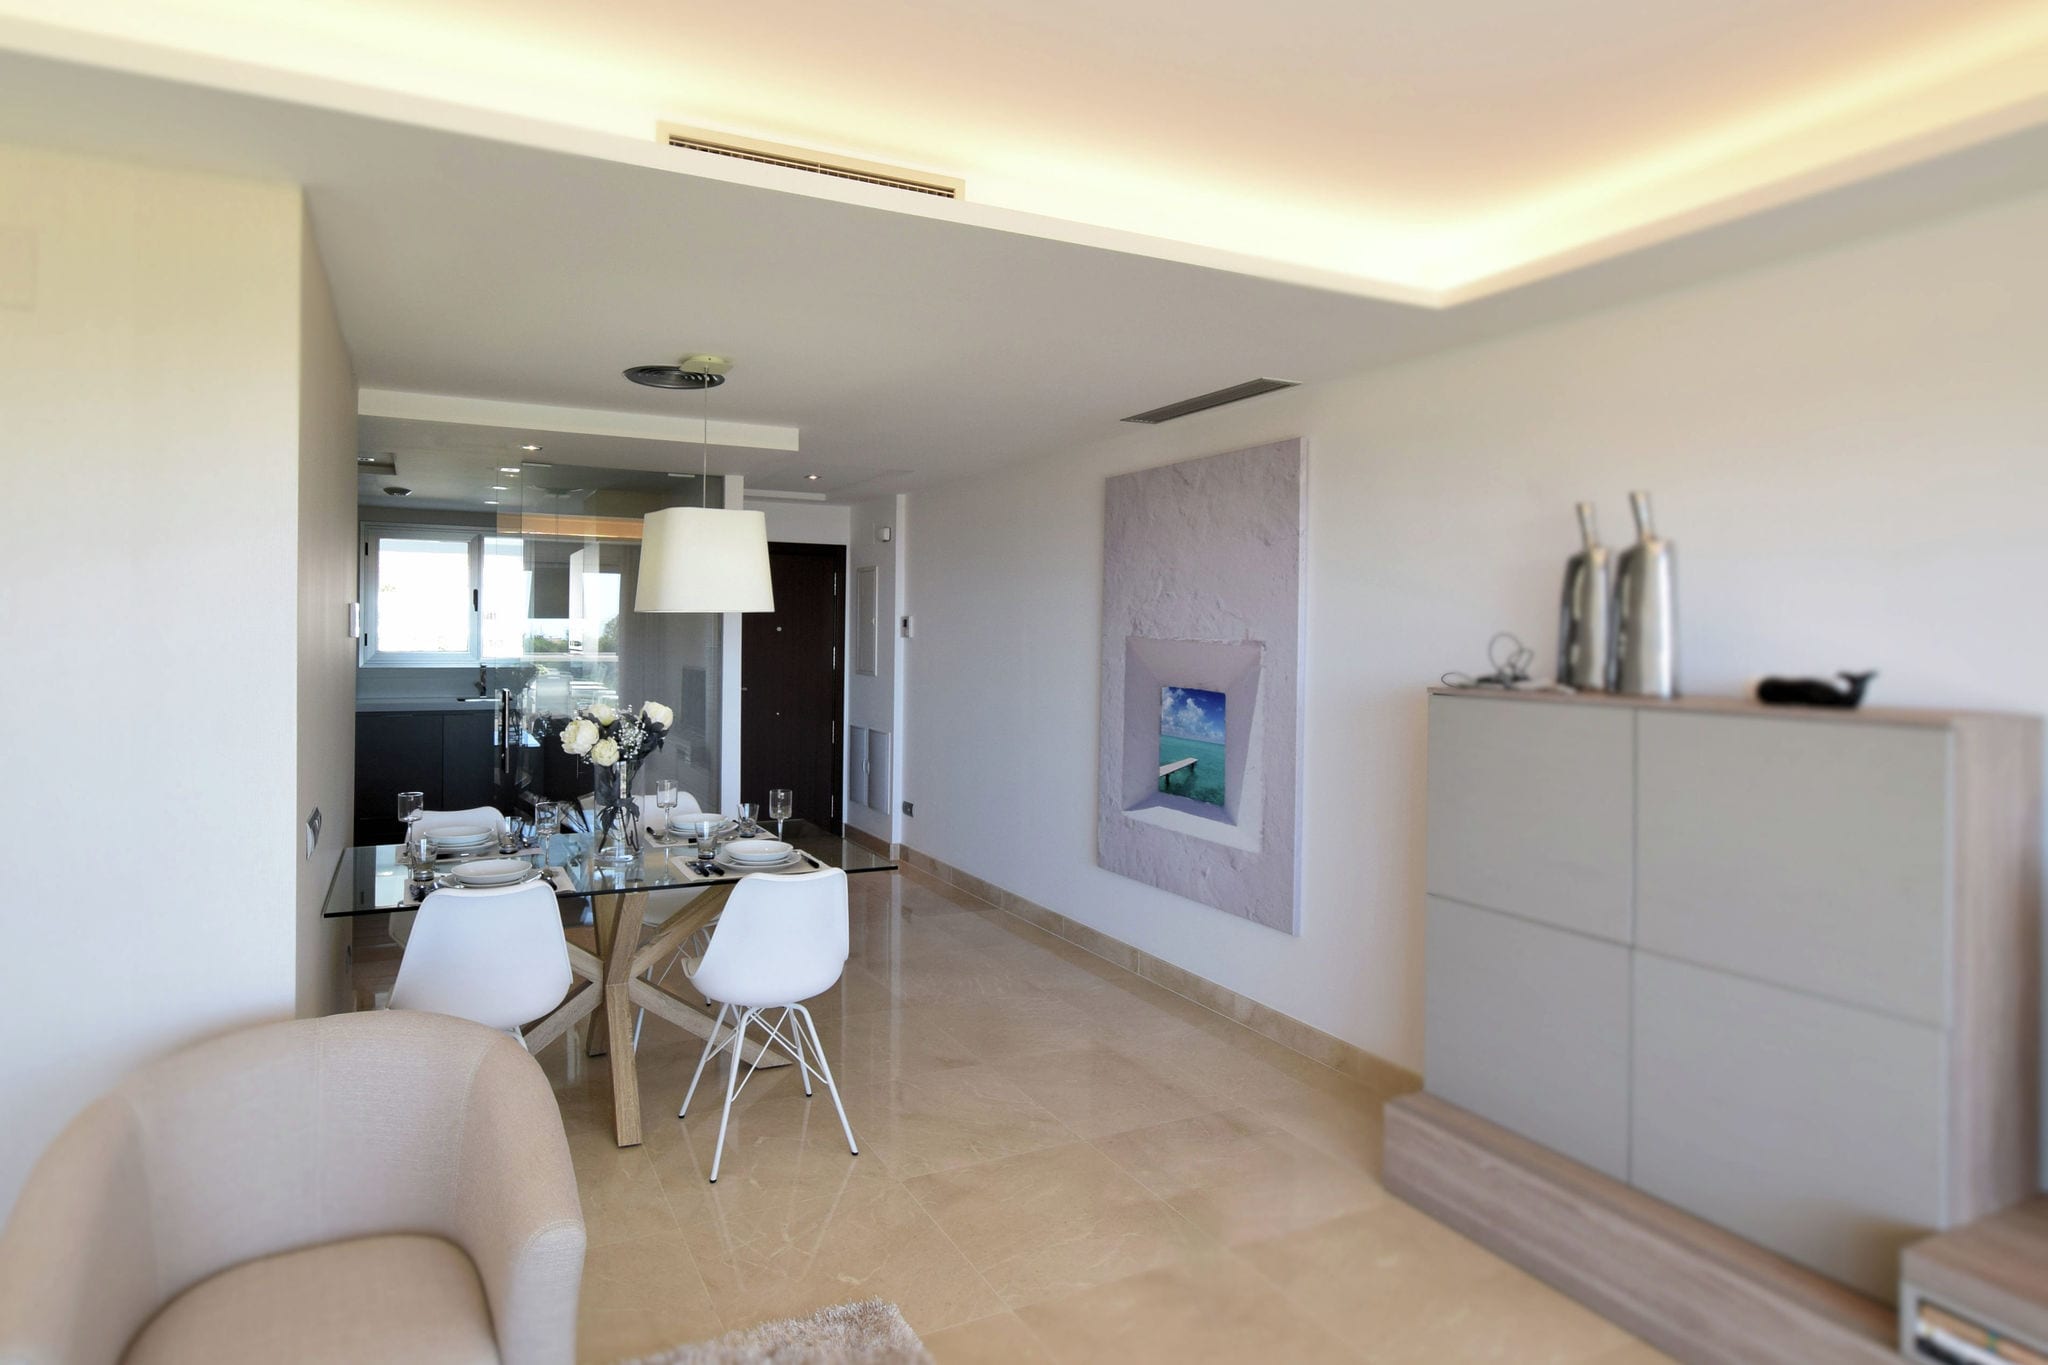 New luxury flat at La Cala Golf Resort near Mijas between Malaga & Marbella